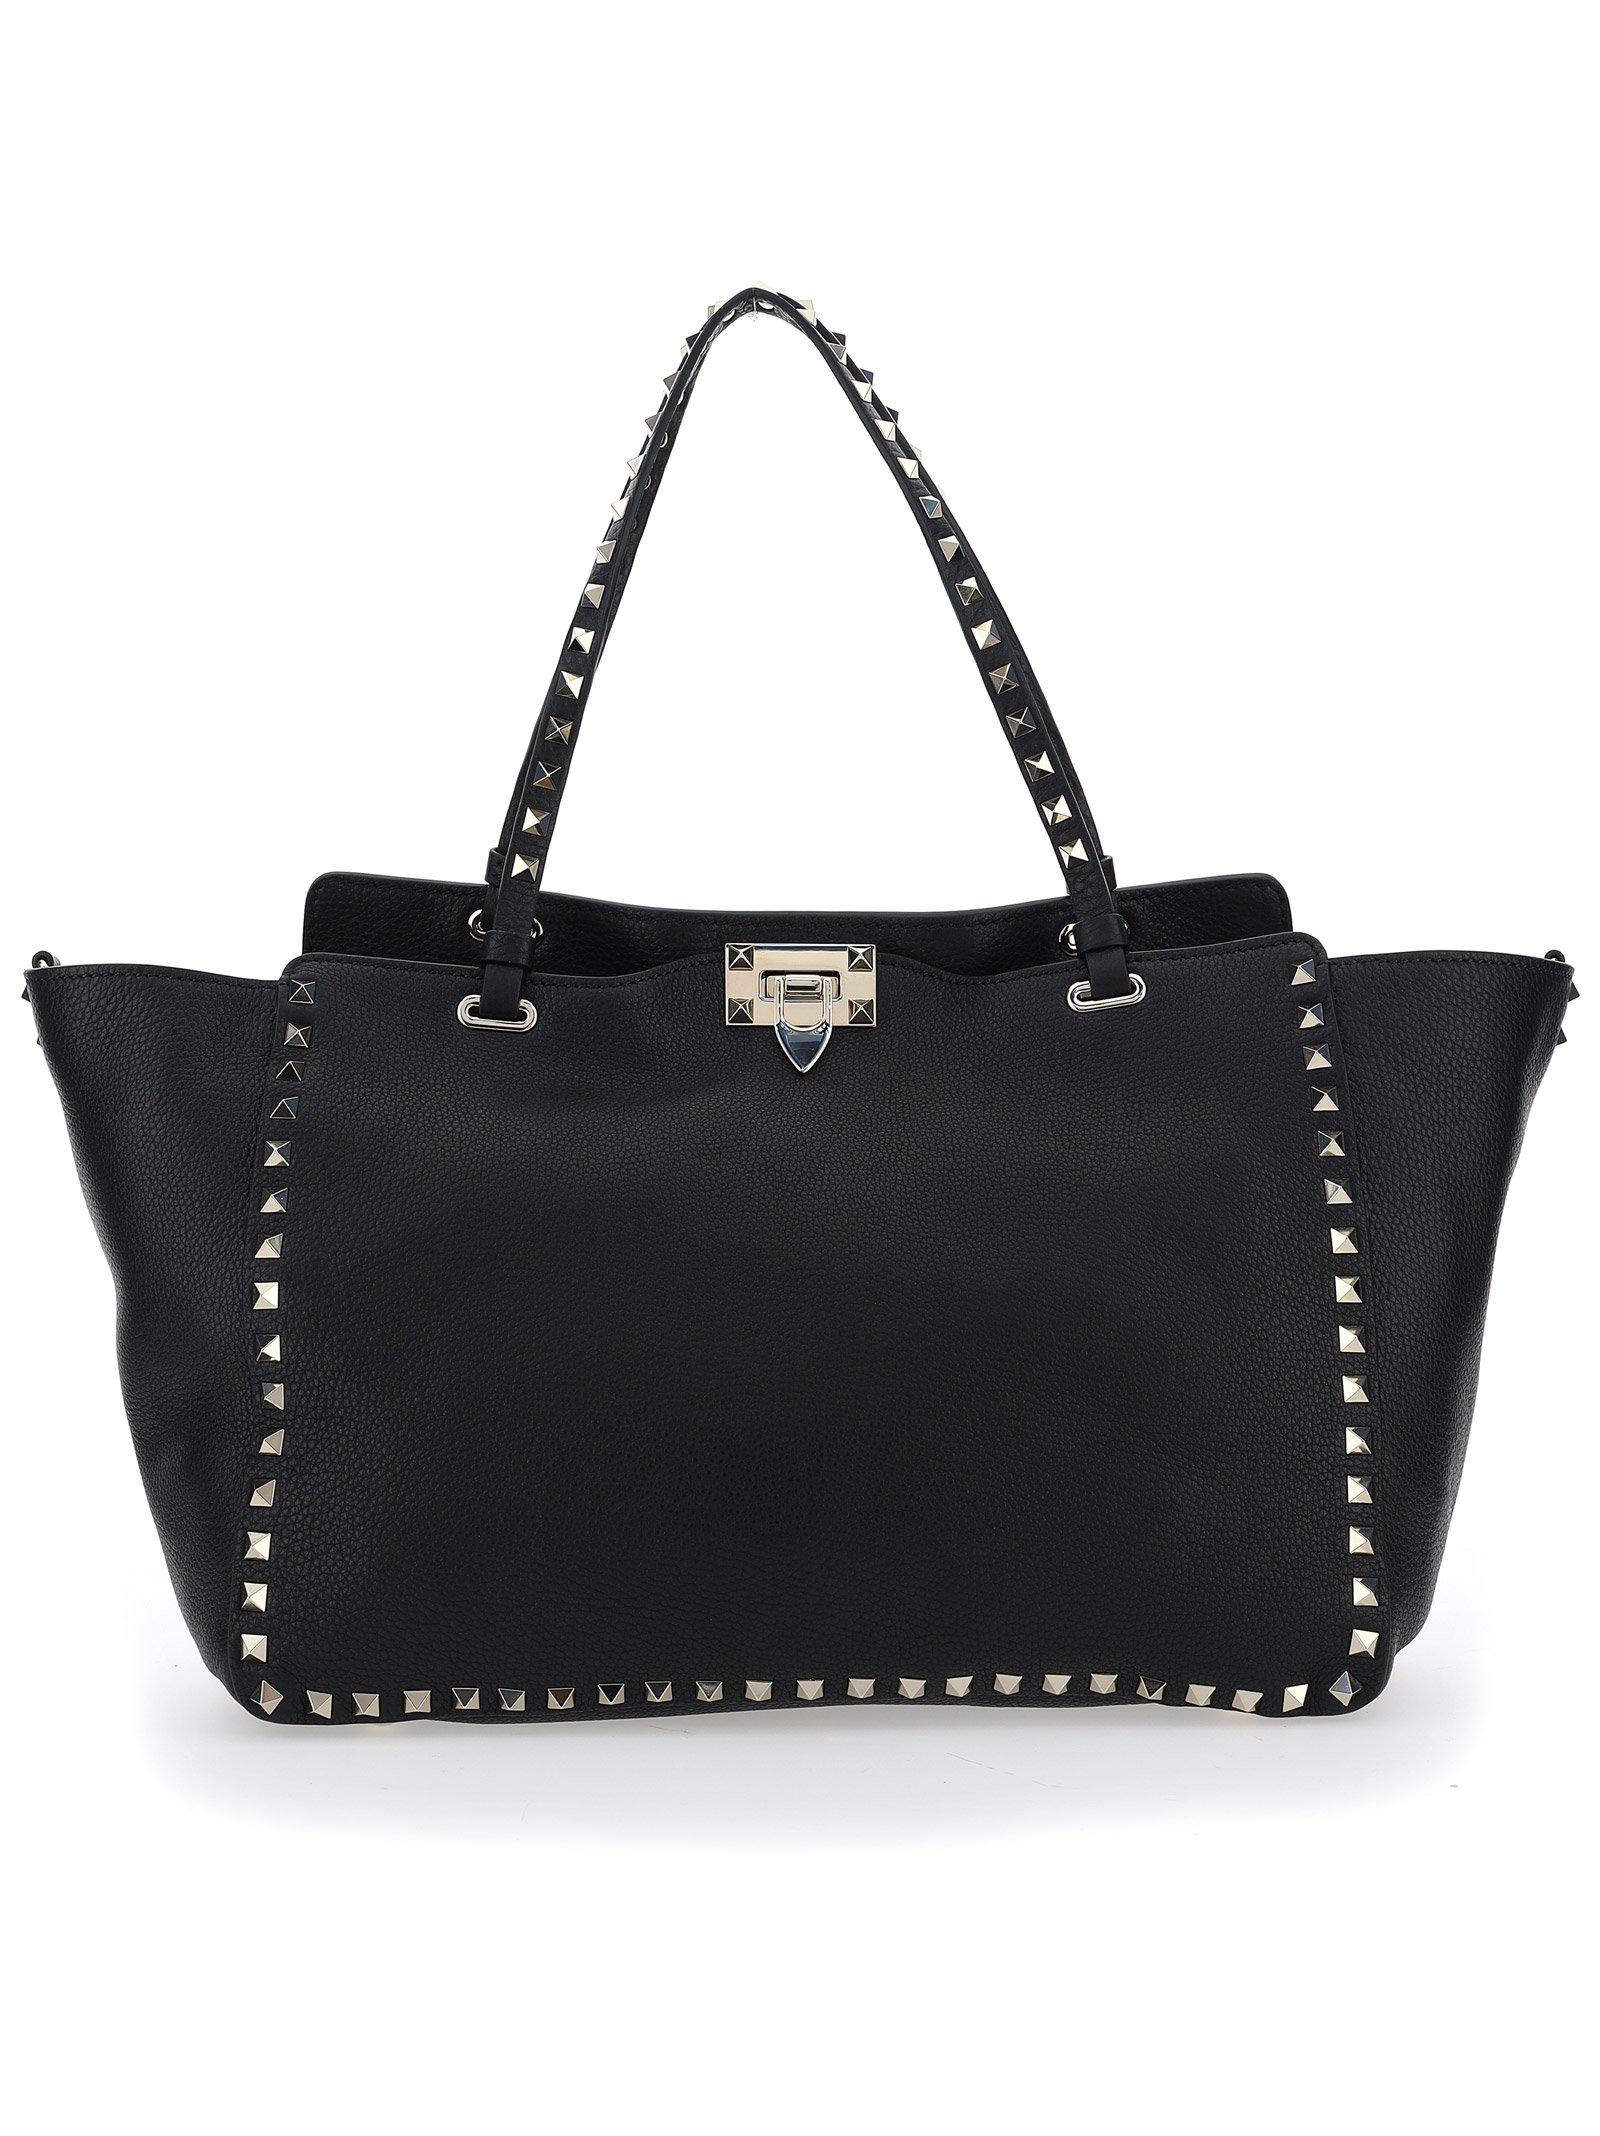 Valentino Leather Garavani Rockstud Medium Tote Bag in Black - Lyst